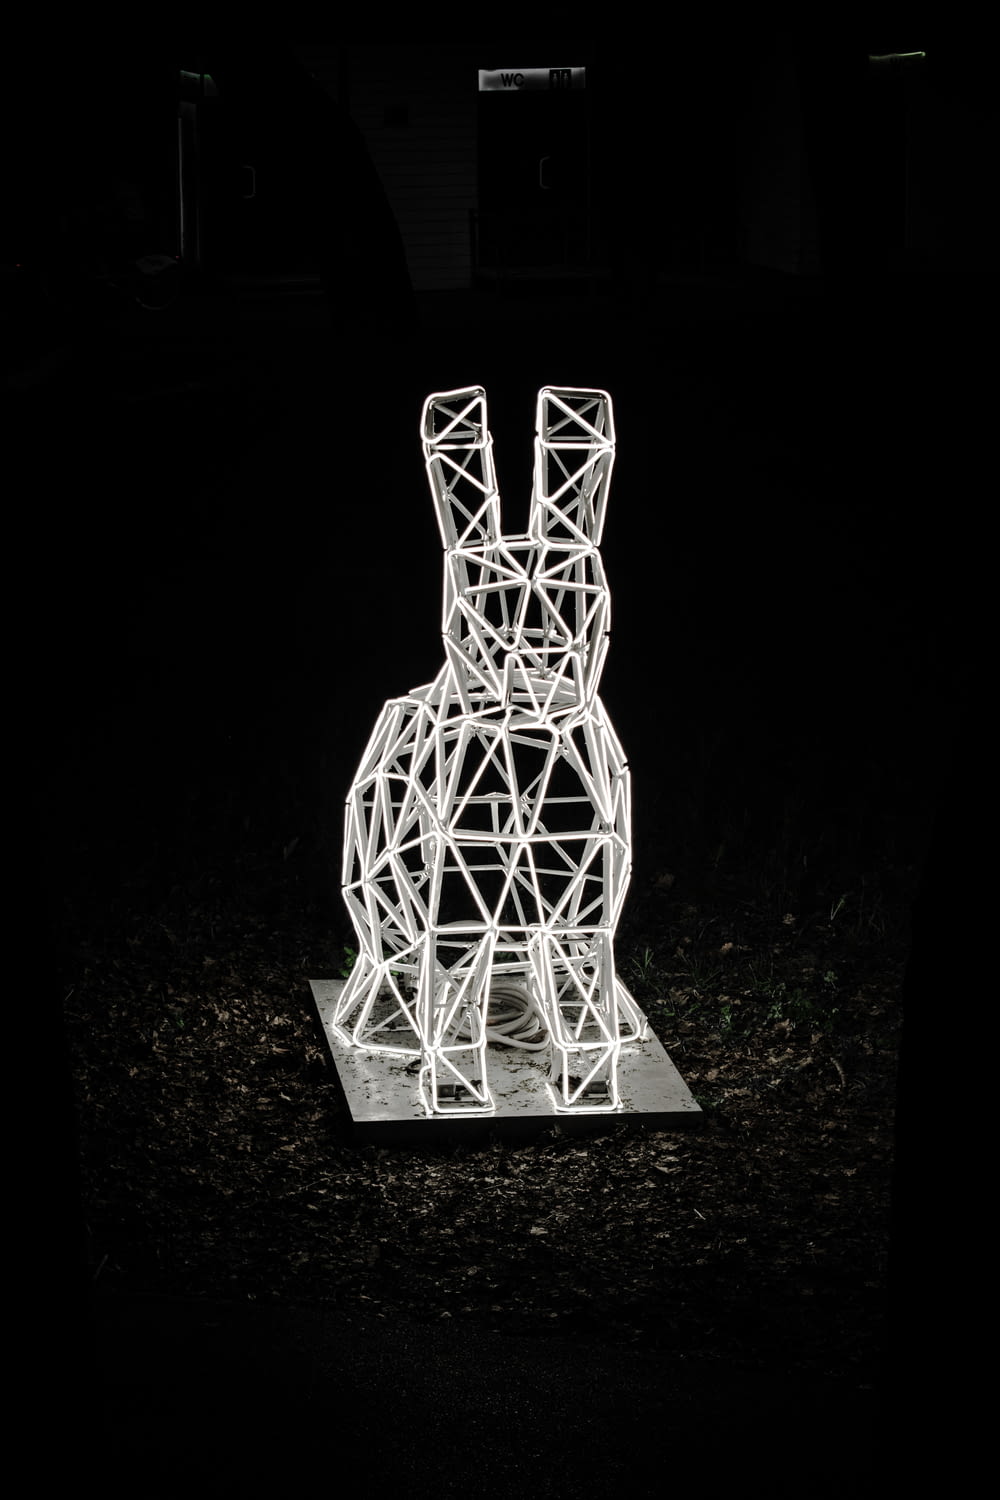 a sculpture of a rabbit in the dark